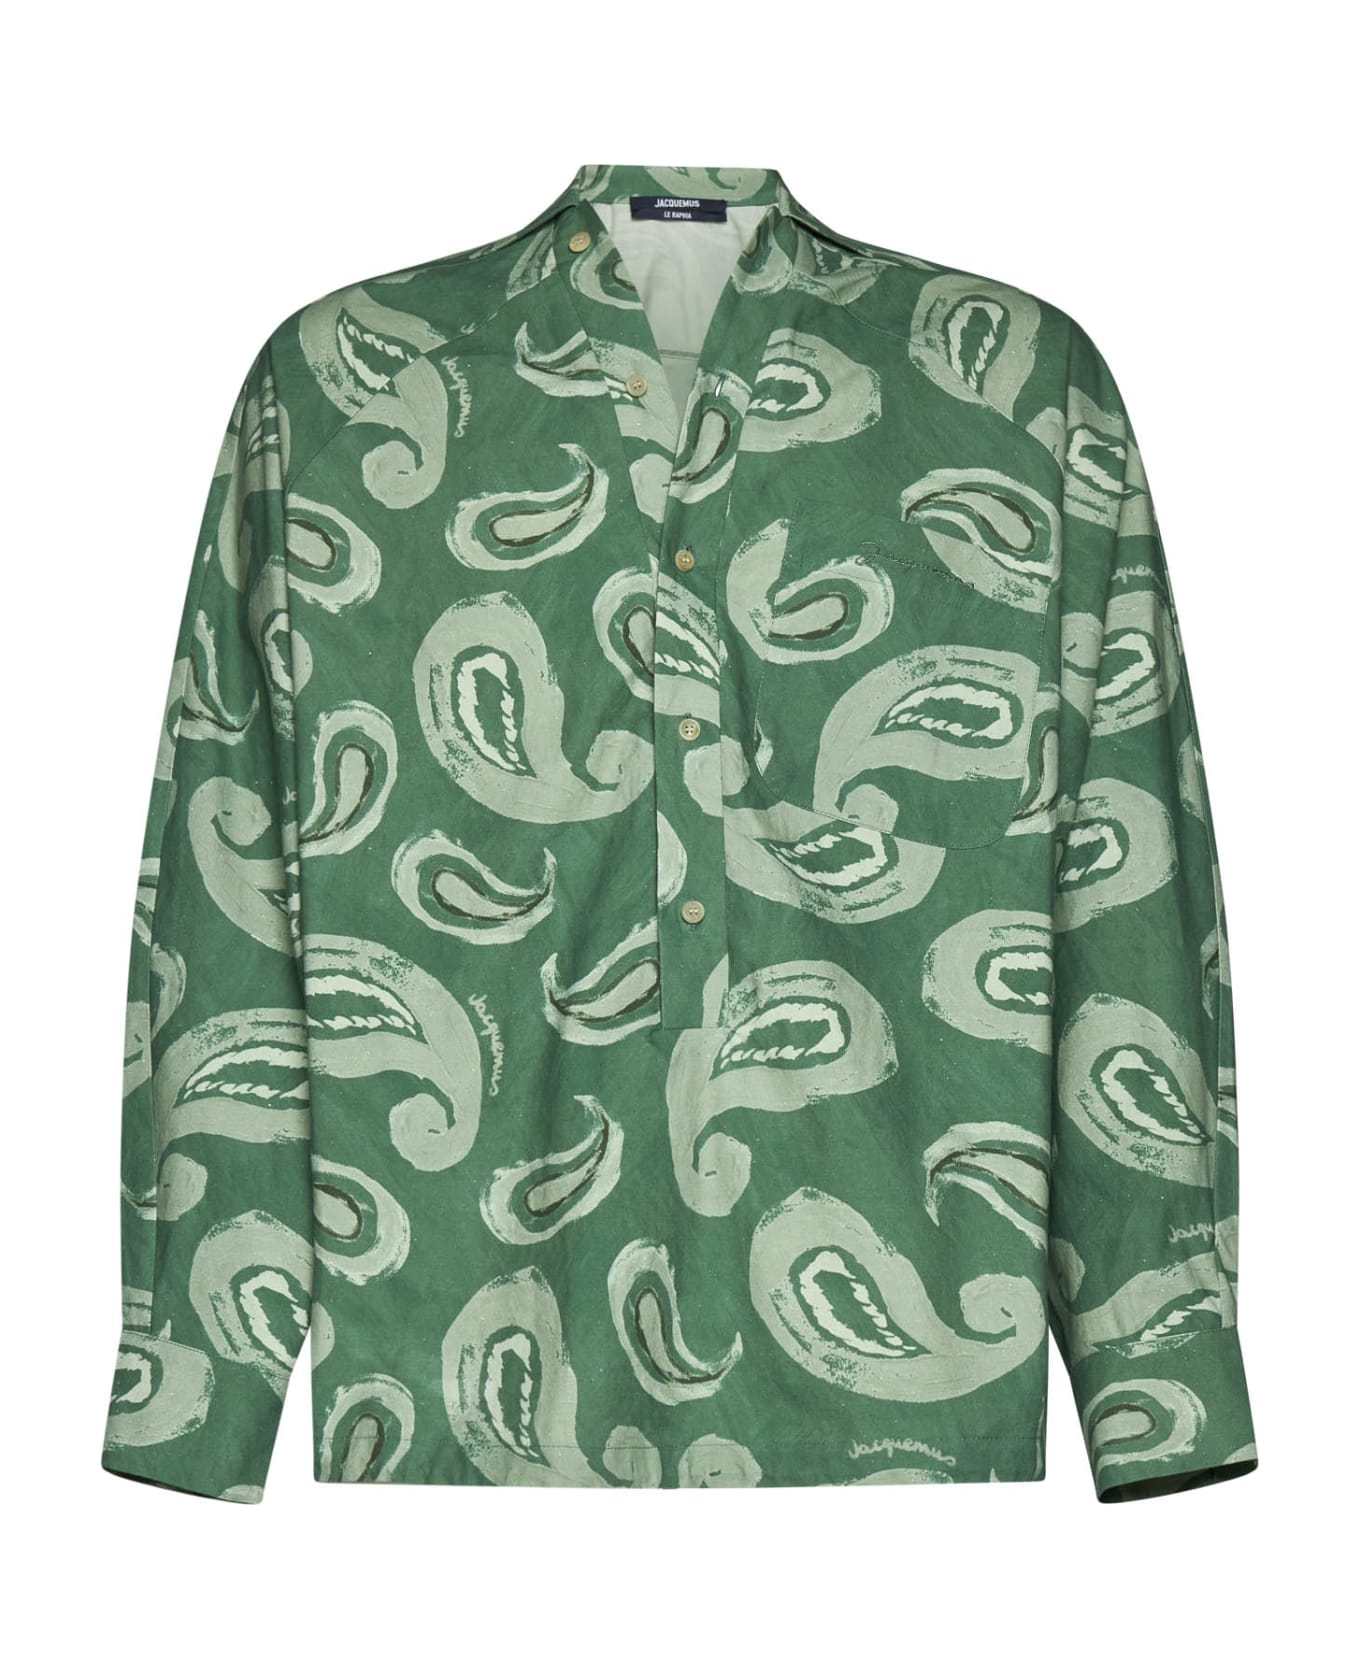 Jacquemus Shirt - Print pop green paisley